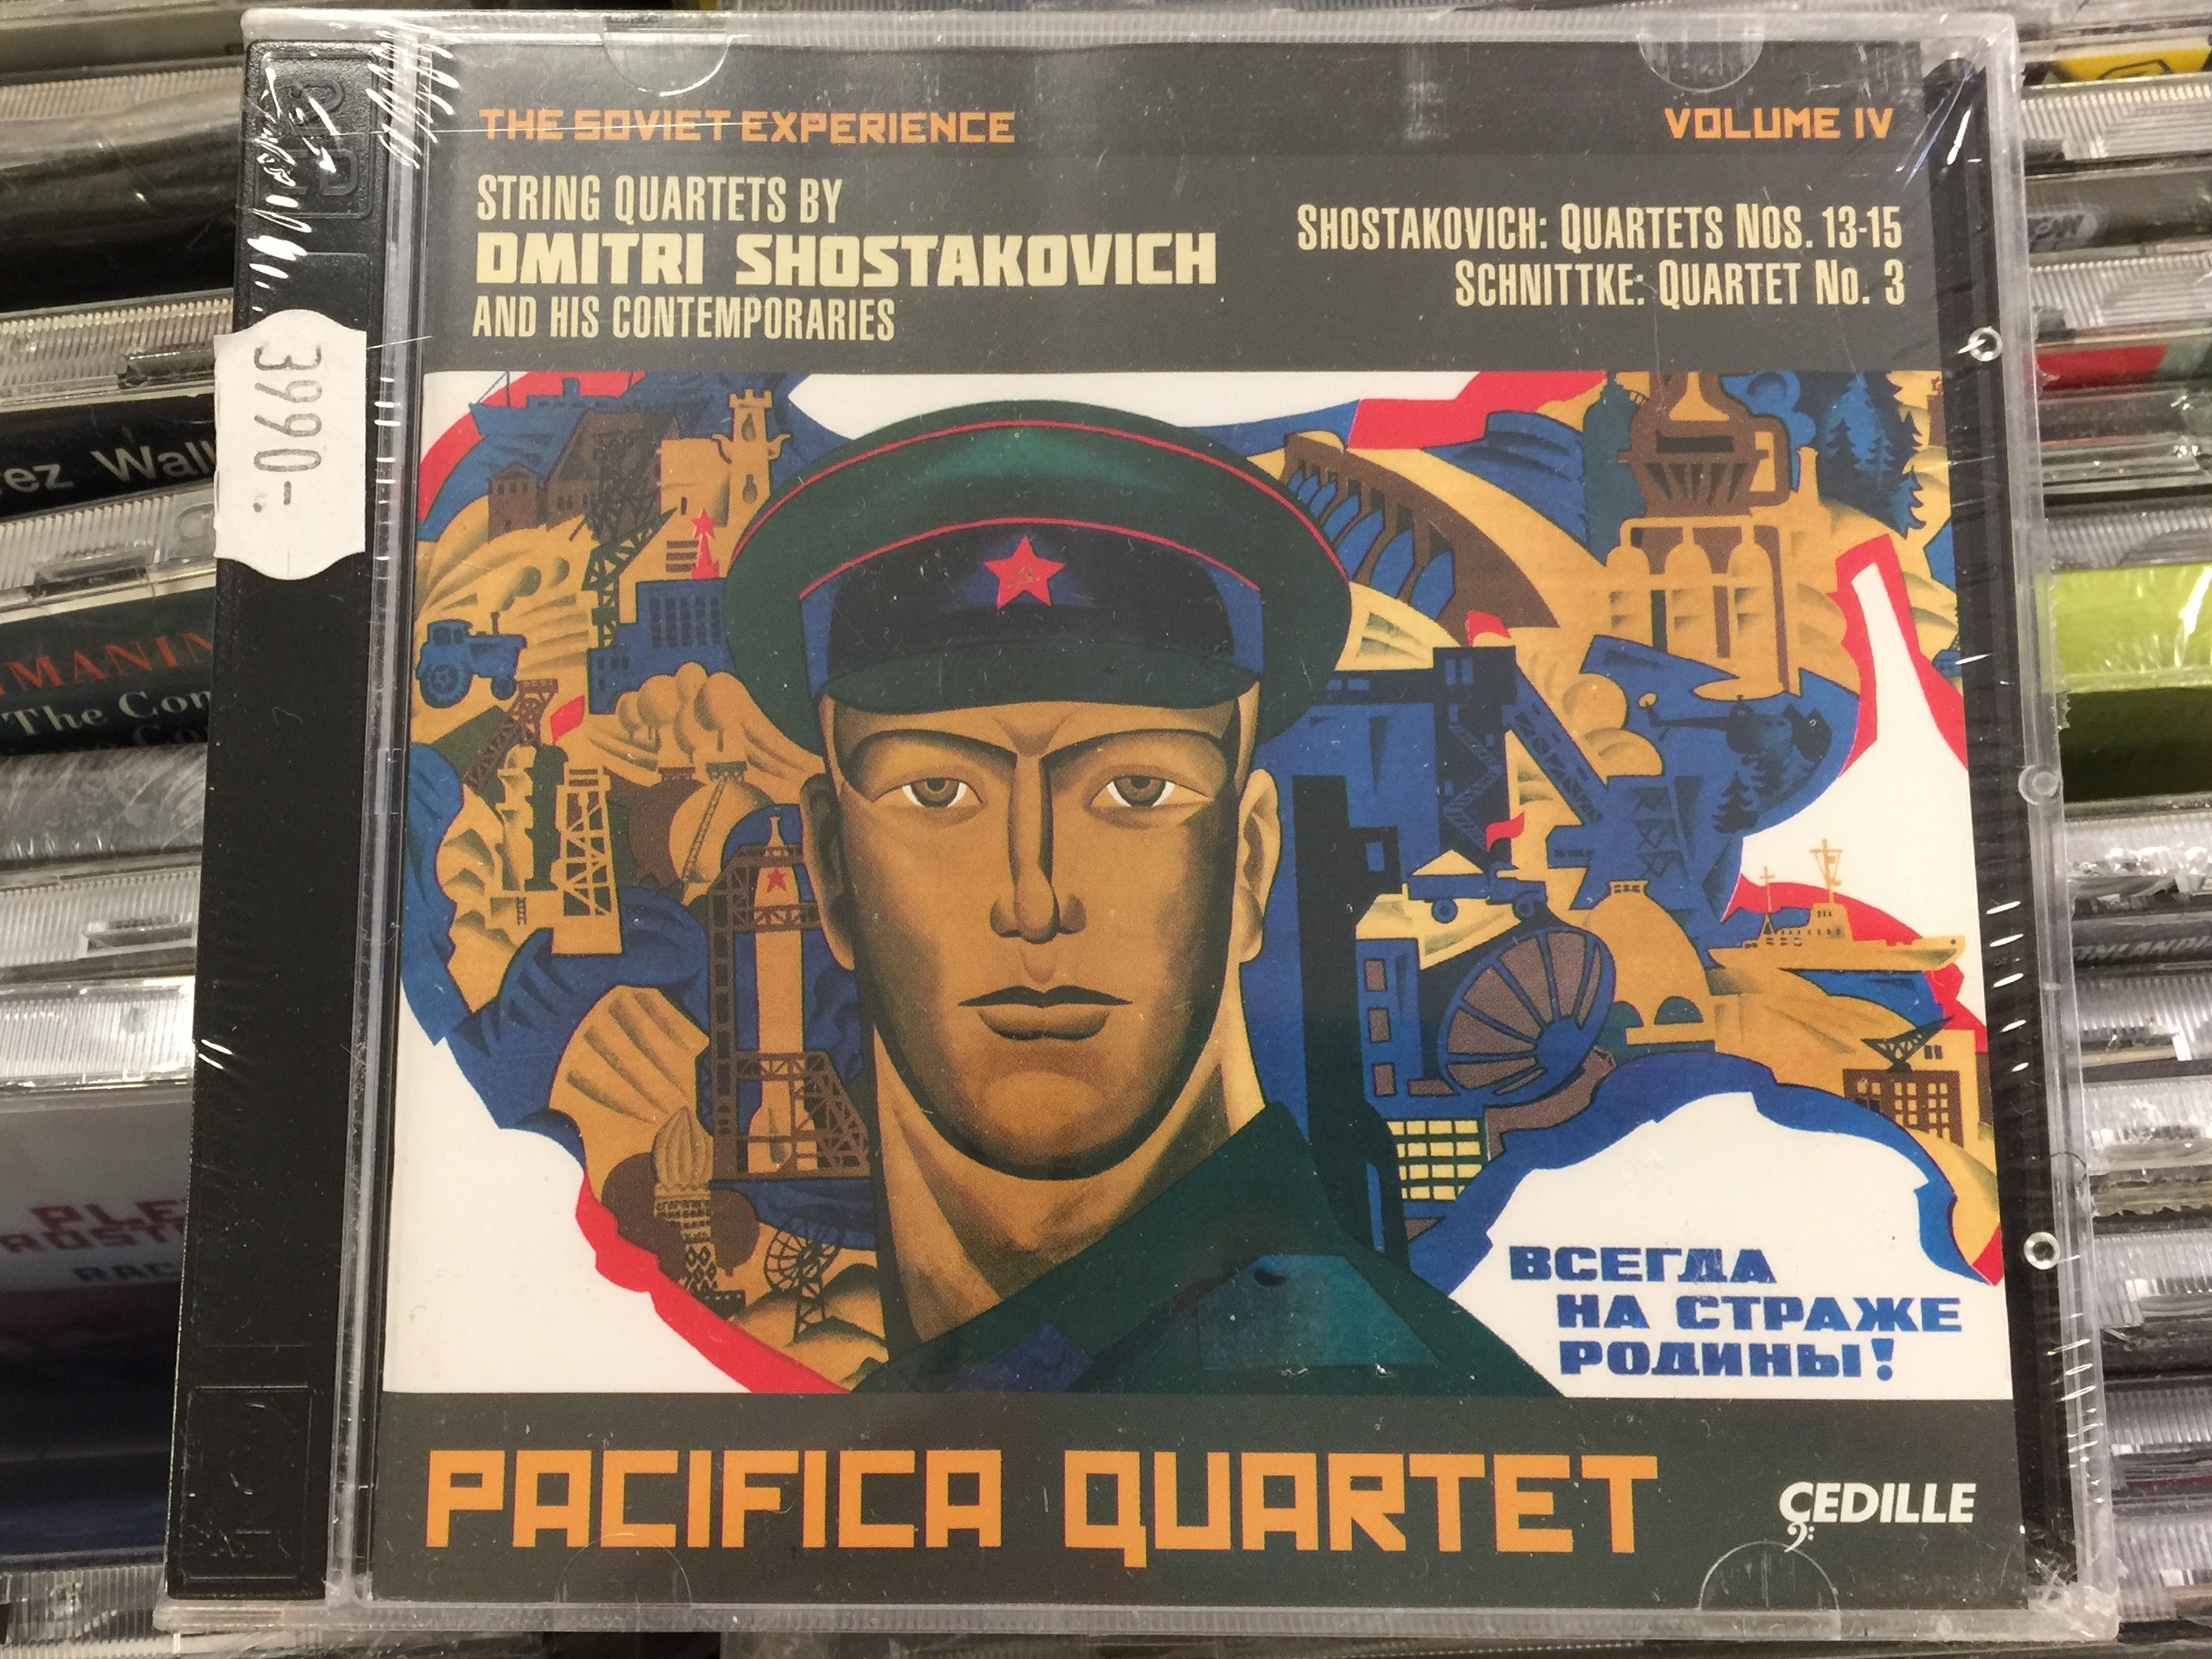 the-soviet-experience-volume-iv-string-quartets-by-dimitri-shostakovich-and-his-contemporaries-shostakovich-quartets-nos.-13-15-schnittke-quartet-no.-3-pacifica-quartet-cedille-records-2x-a-1-.jpg